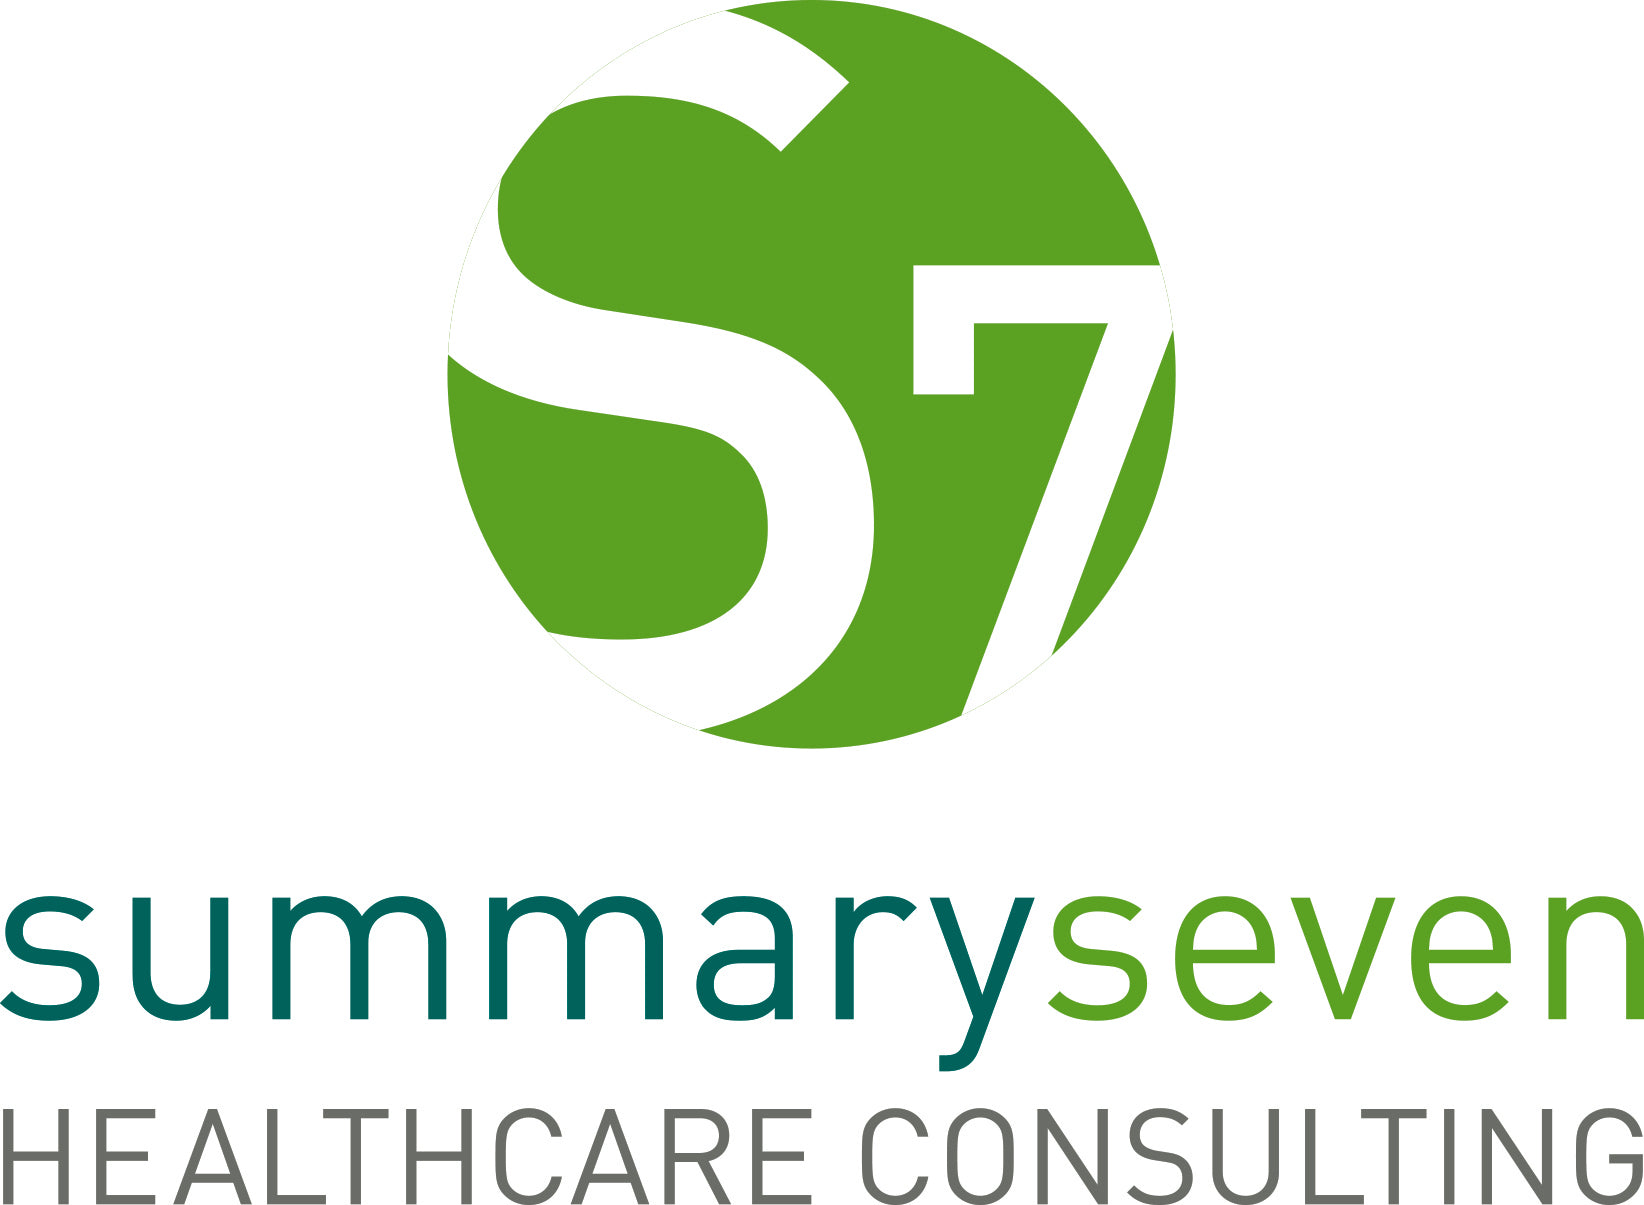 Logo Partner Swiss Medical Food Summary Seven Healthcare Consulting grüner Kreis mit S und 7 darin